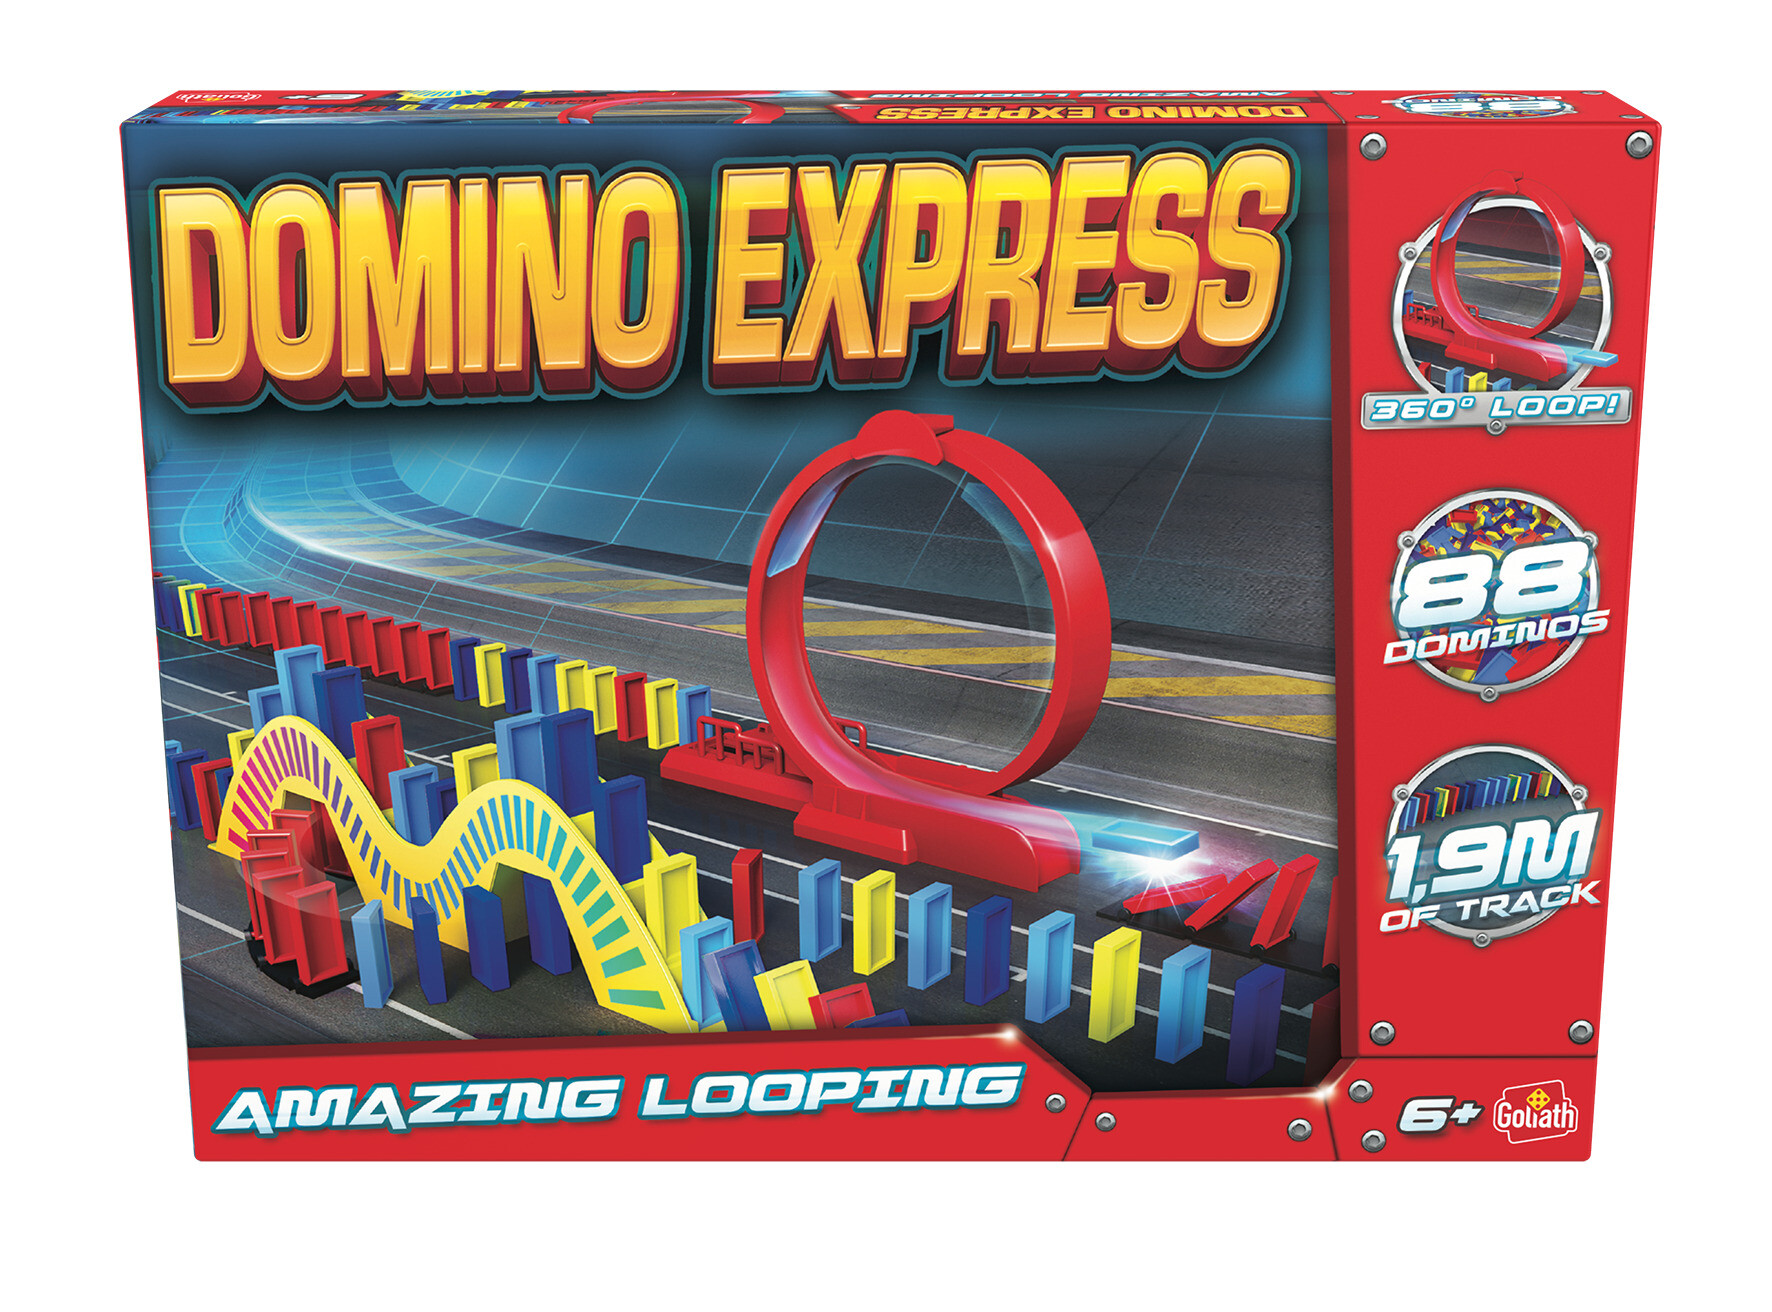 Domino express - amazing loop - 